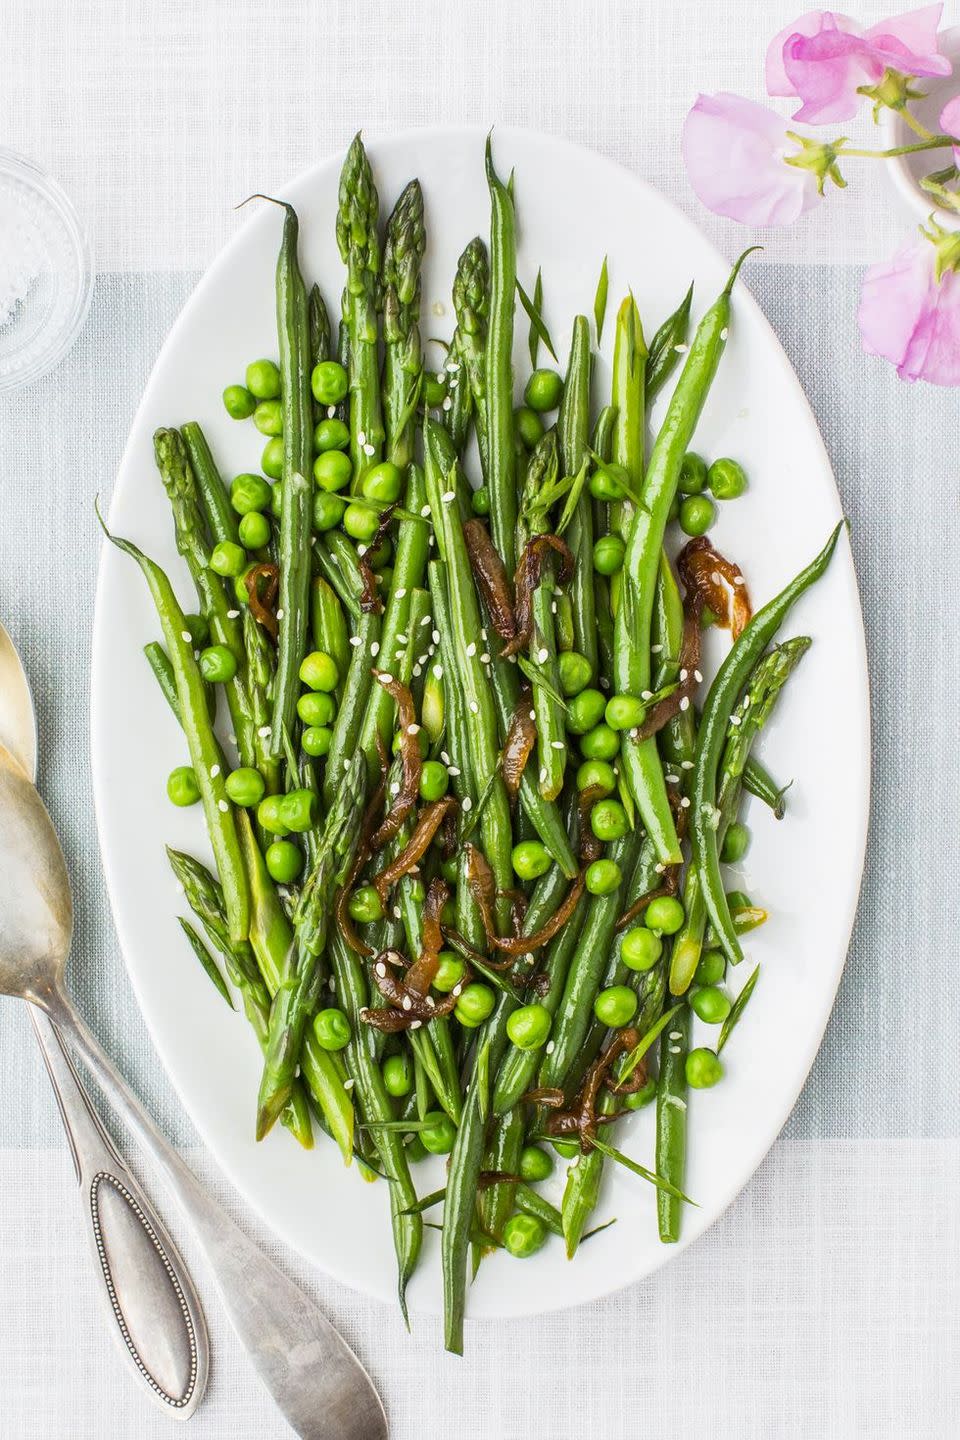 lemony asparagus, beans and peas on a white plate